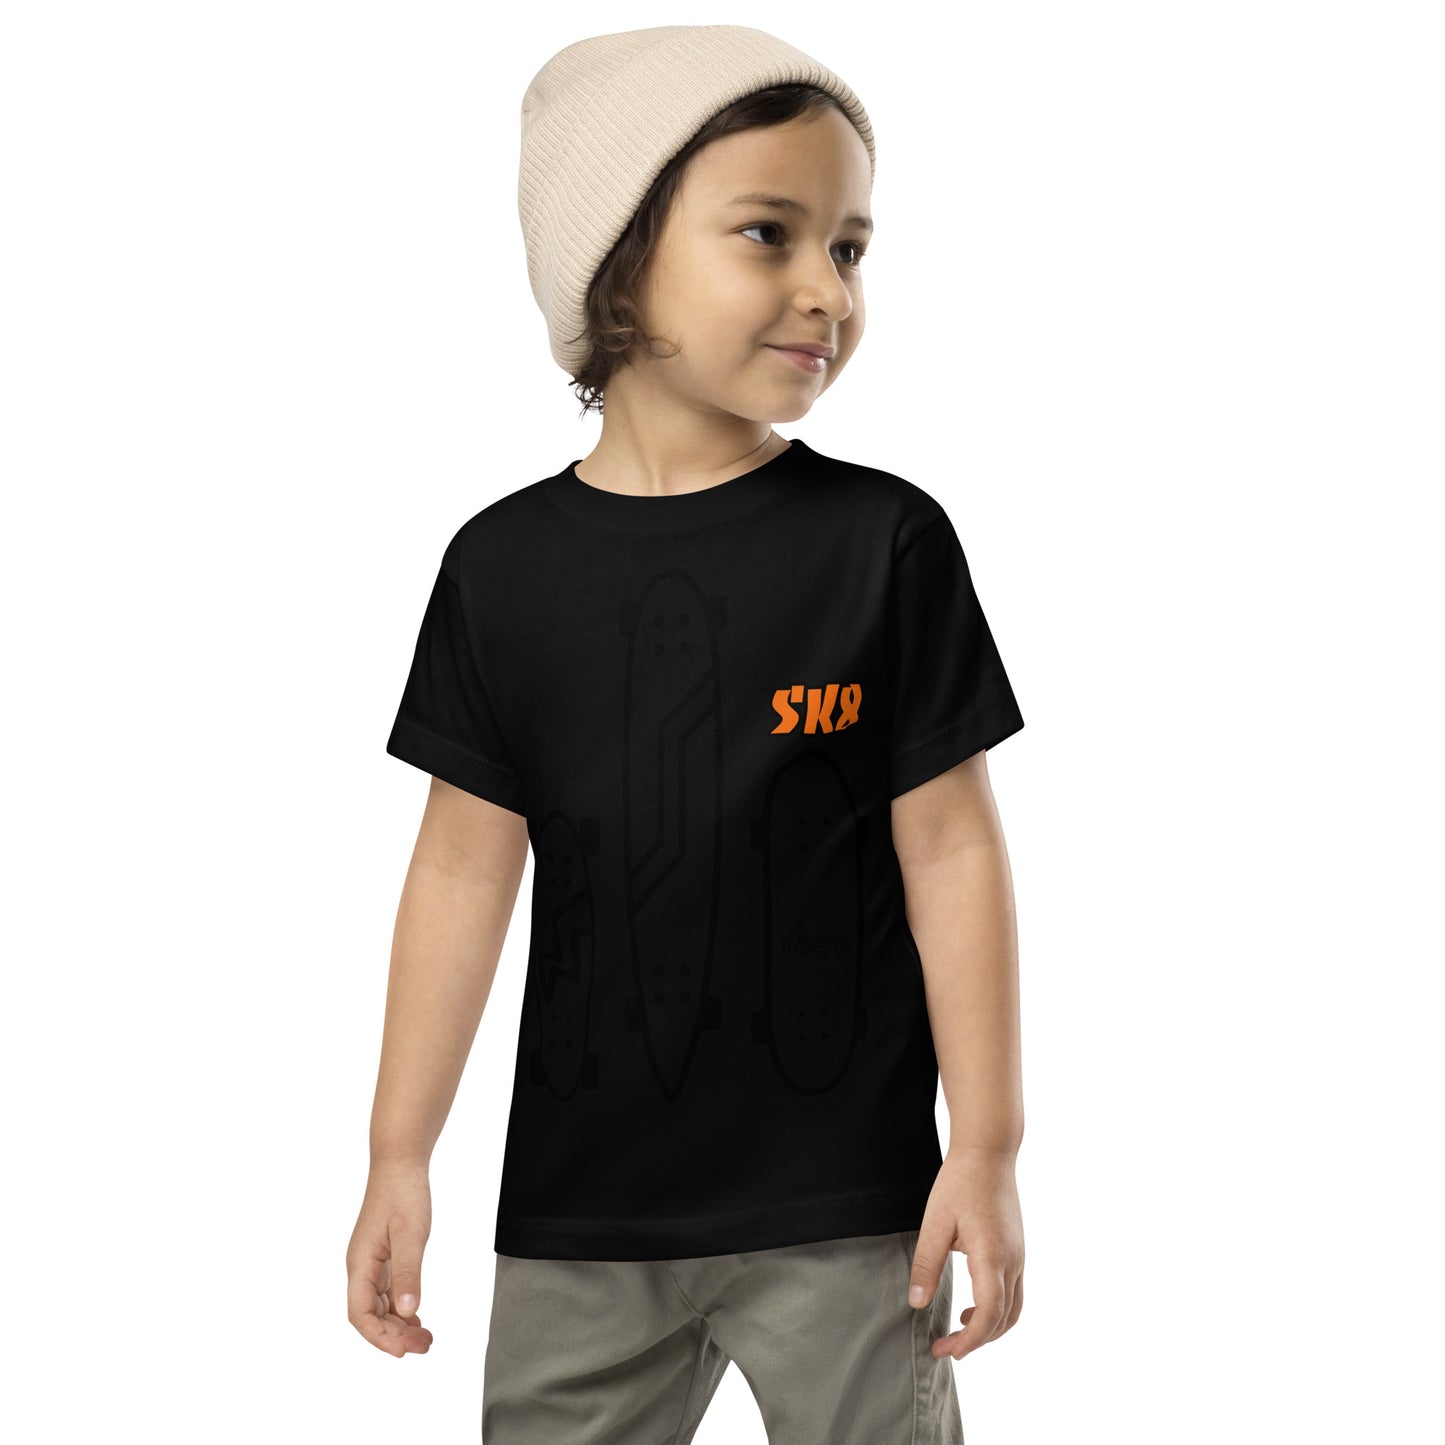 Toddler Short Sleeve Tee "SK8"